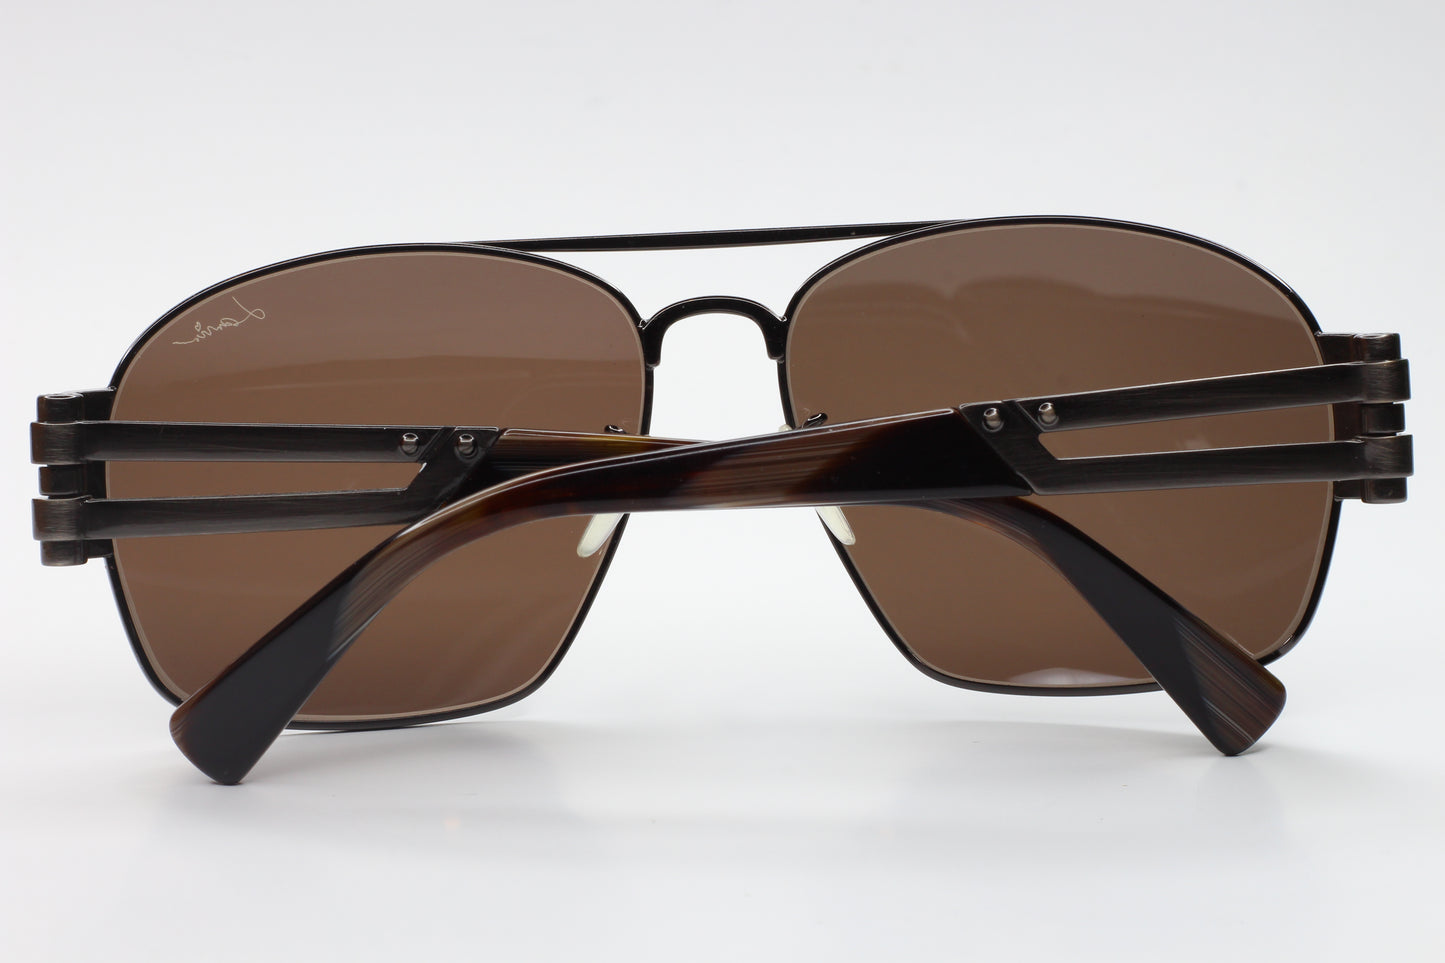 Lanvin SLN002 K20 Brown Designer Gunmetal Full Rim Metal Luxury Sunglasses - ABC Optical